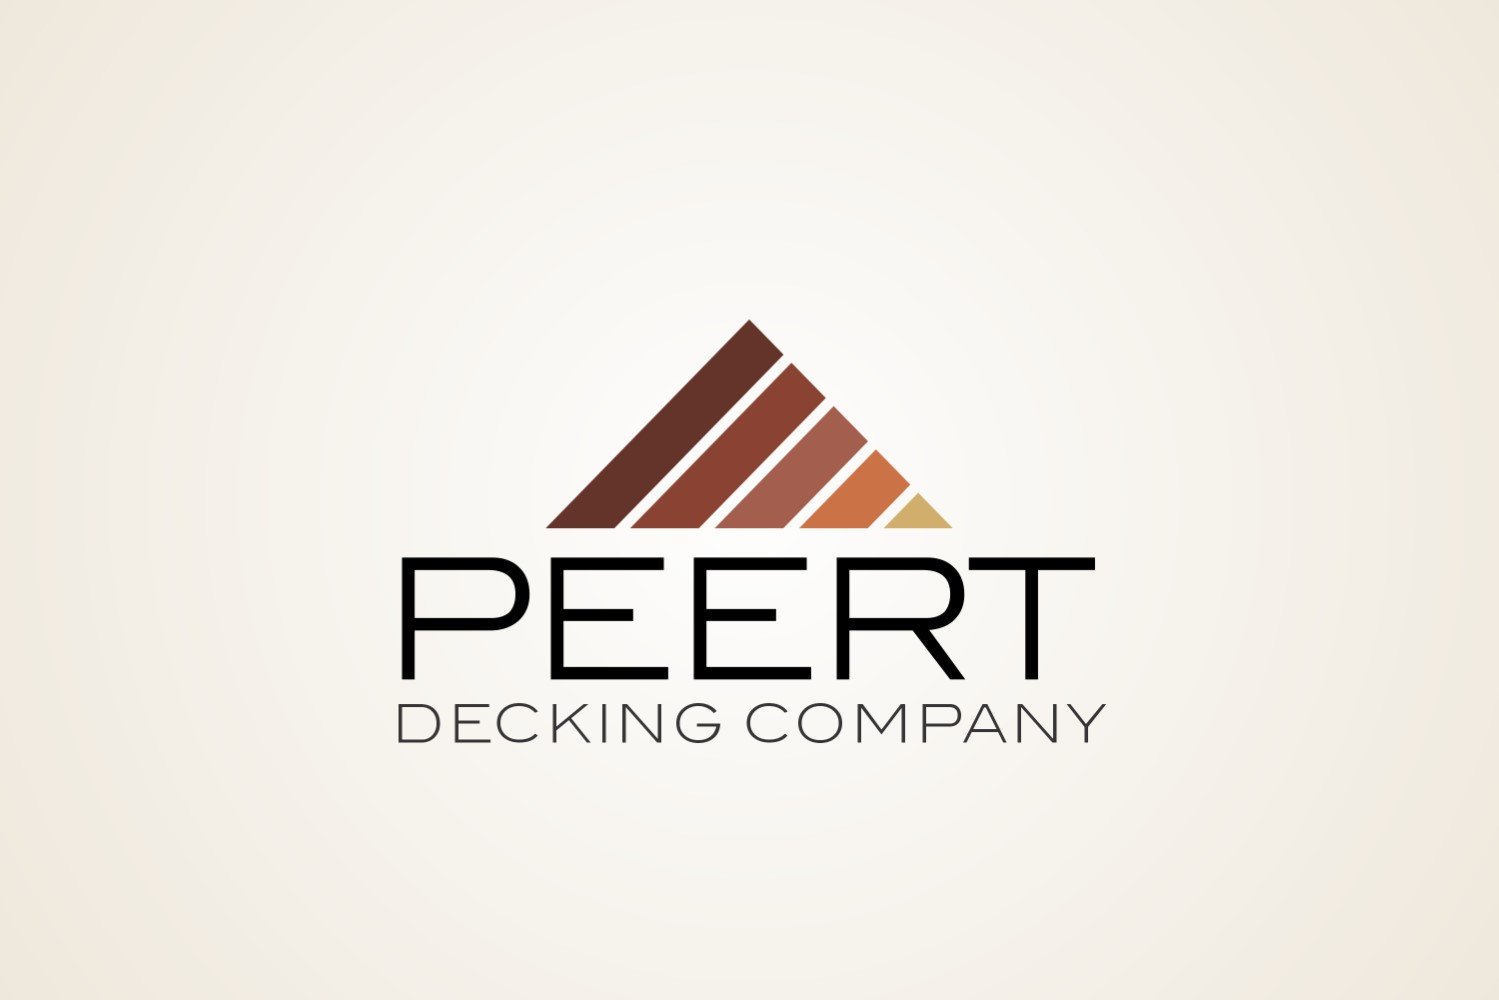 Peert Decking Company Logo Design Template